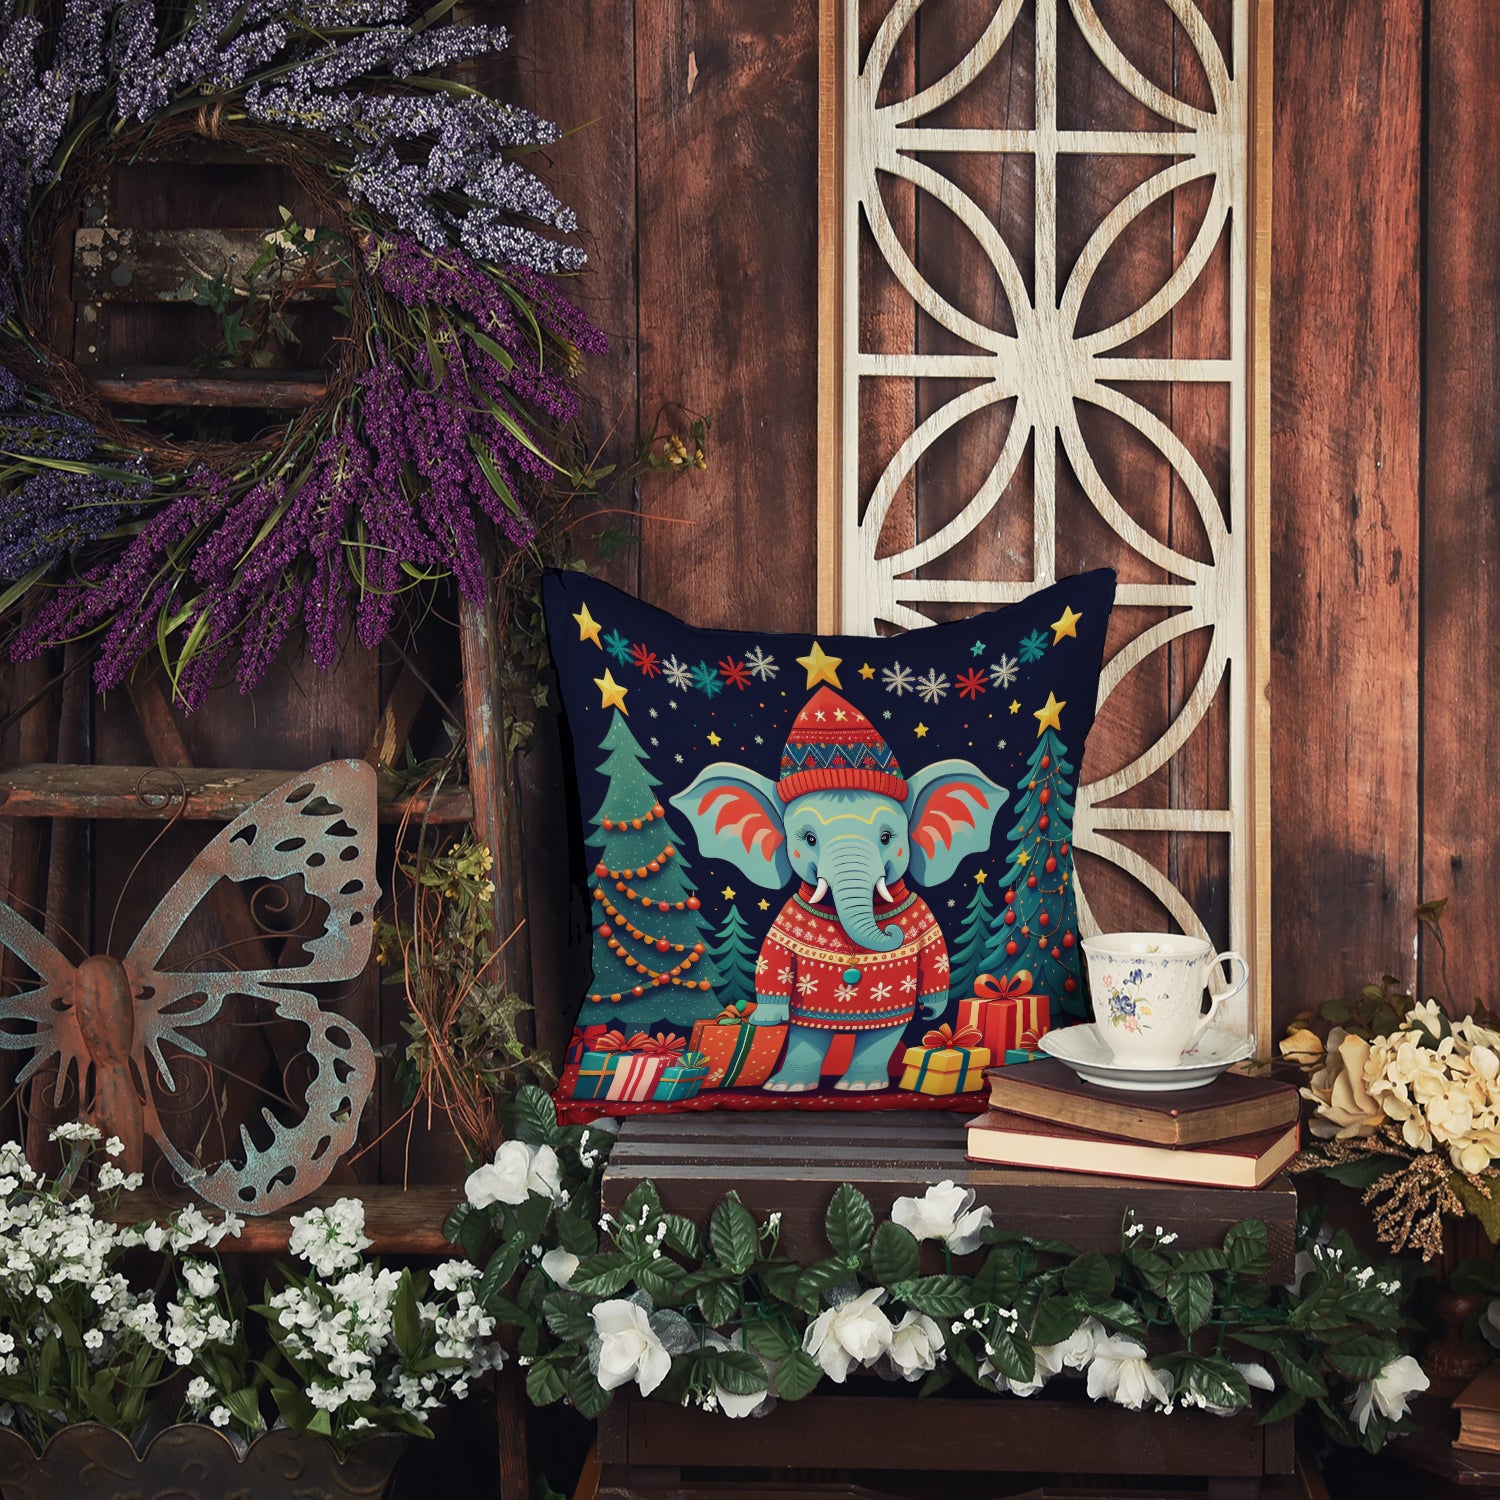 Elephant Christmas Fabric Decorative Pillow